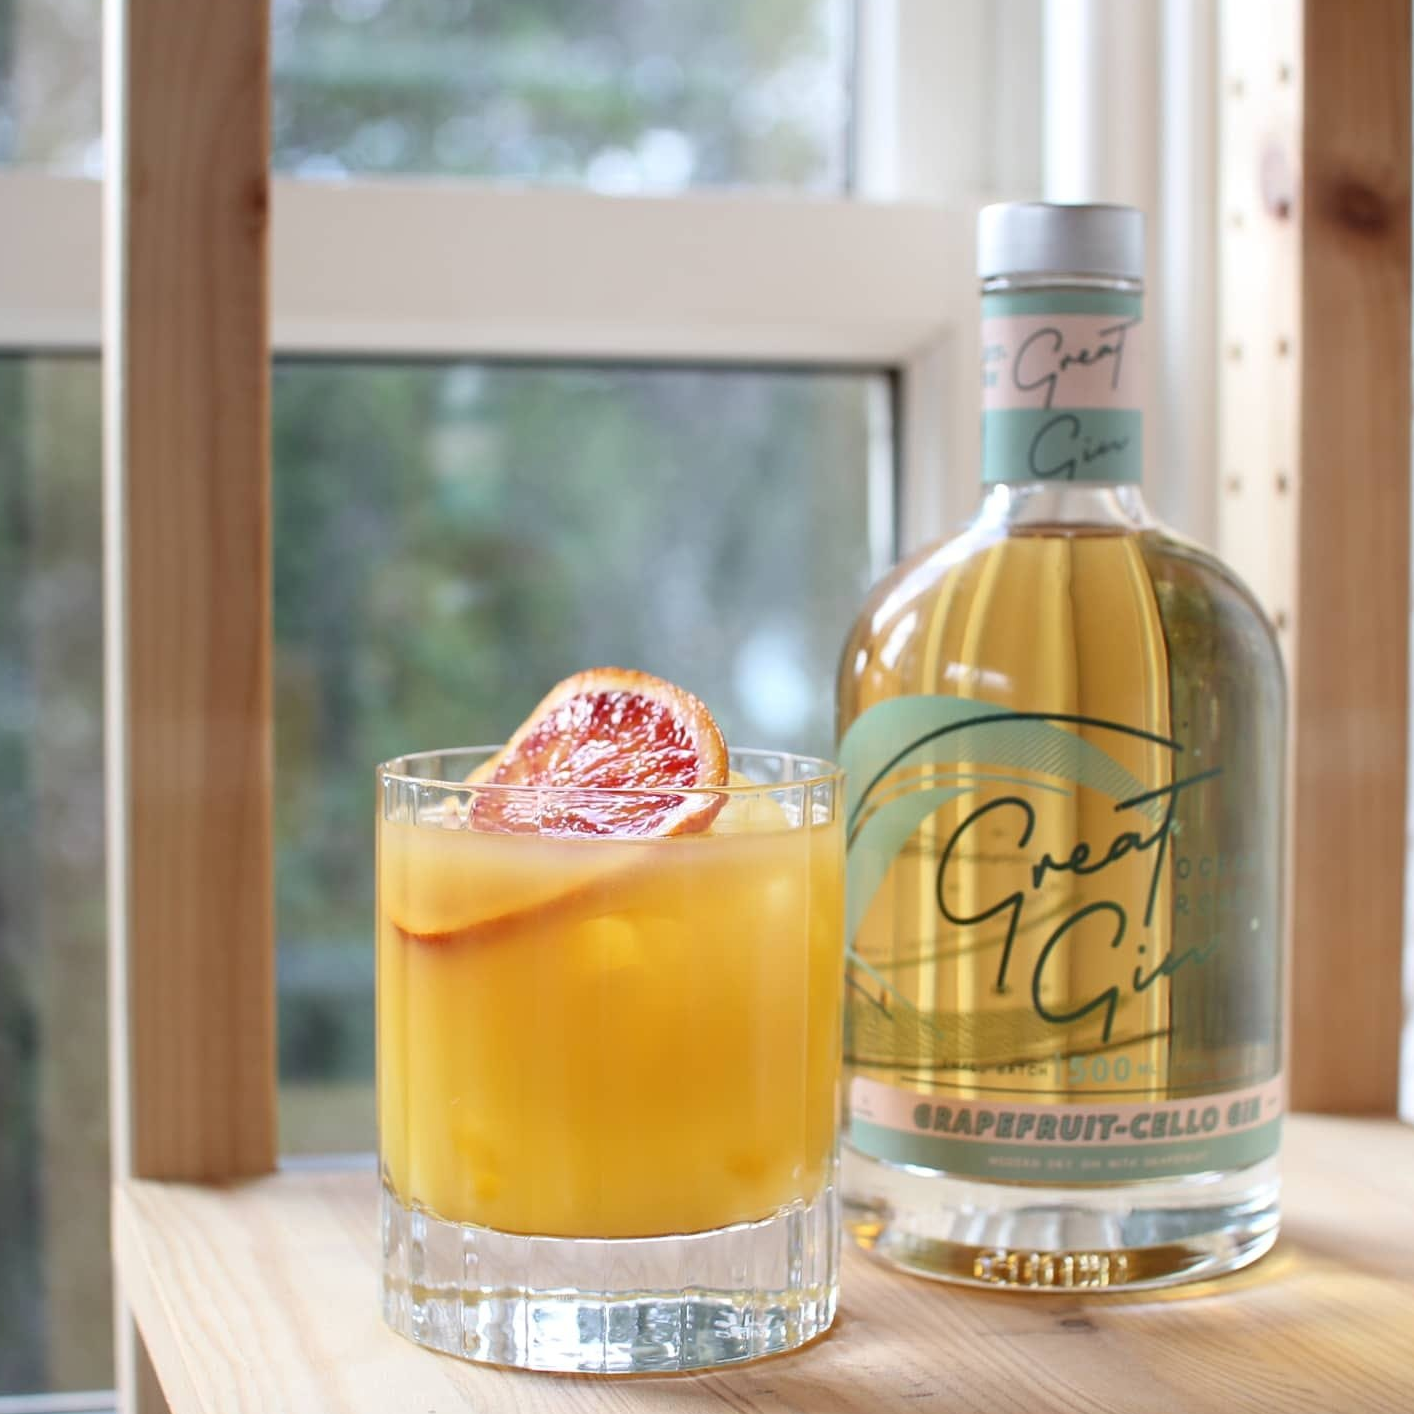 Great Ocean Road Gin: Grapefruit-Cello Gin